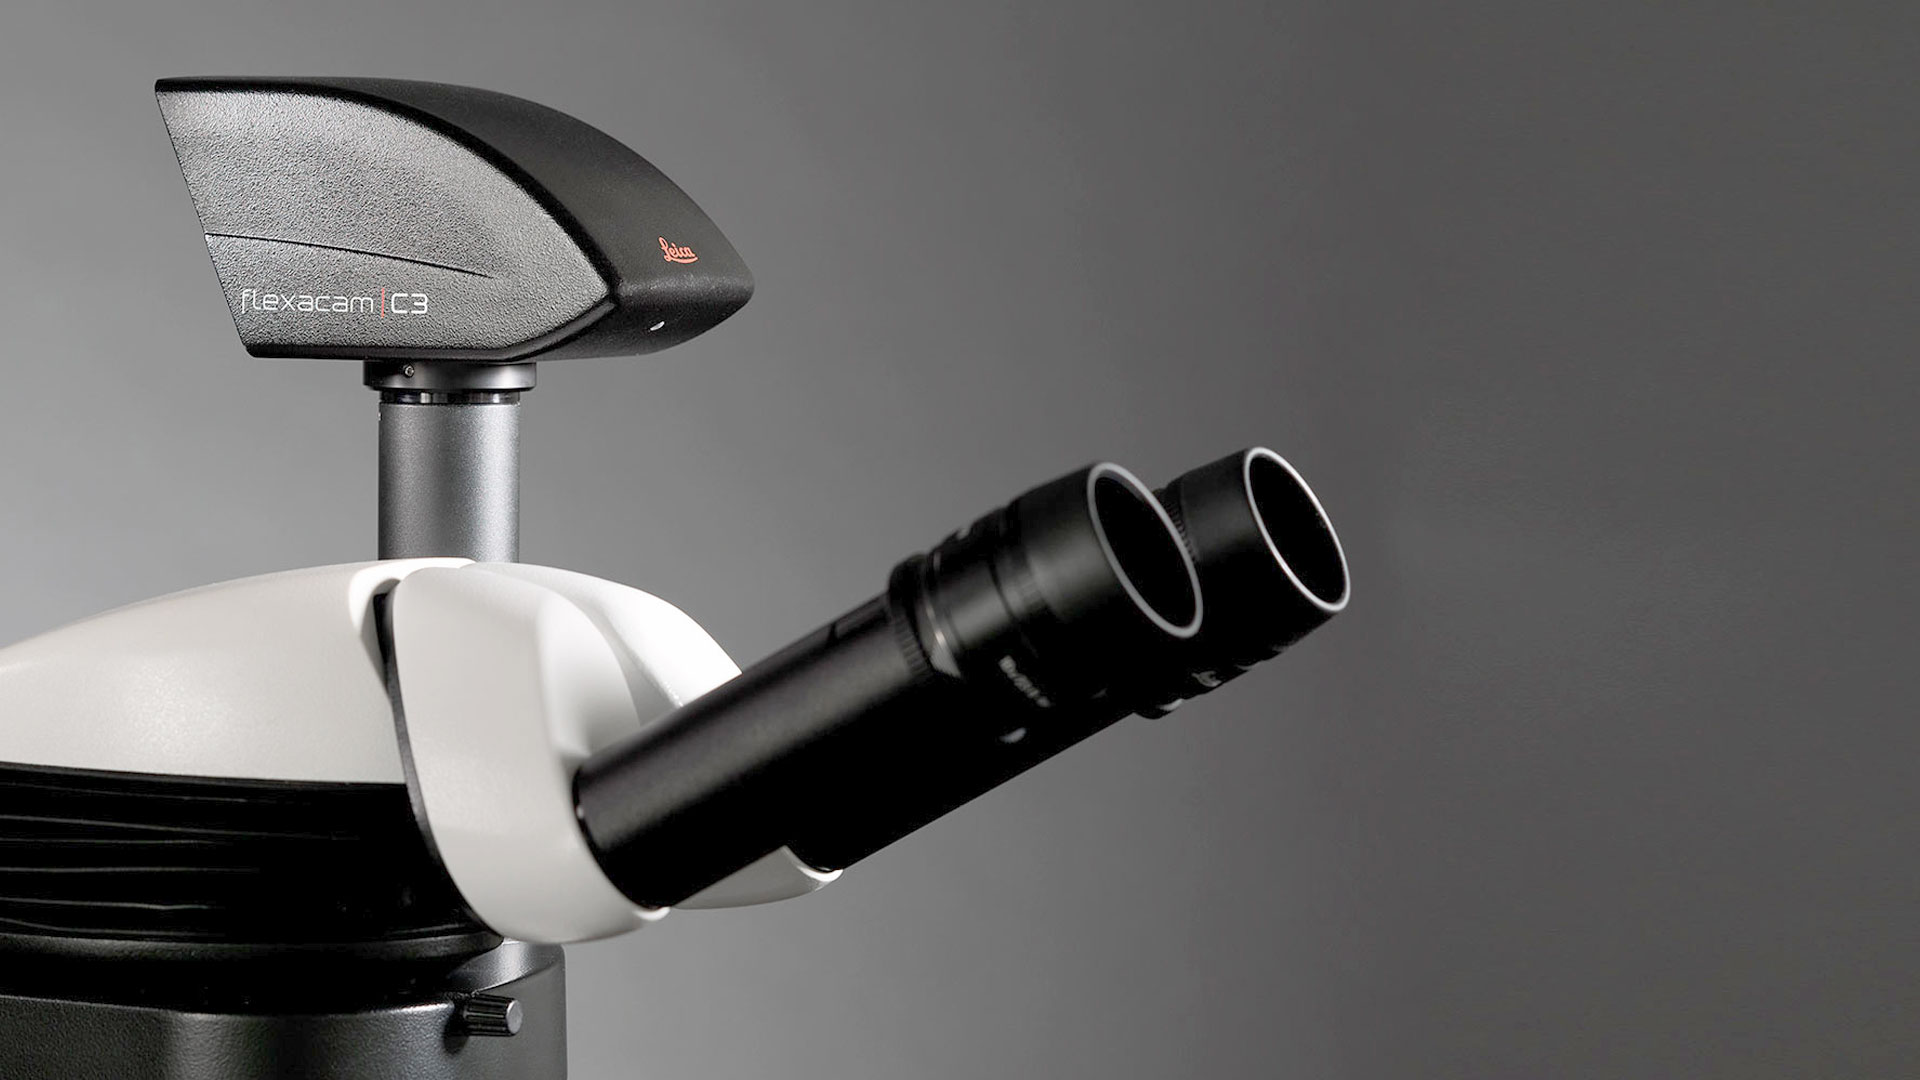 Flexacam C3 12MP Microscope Camera